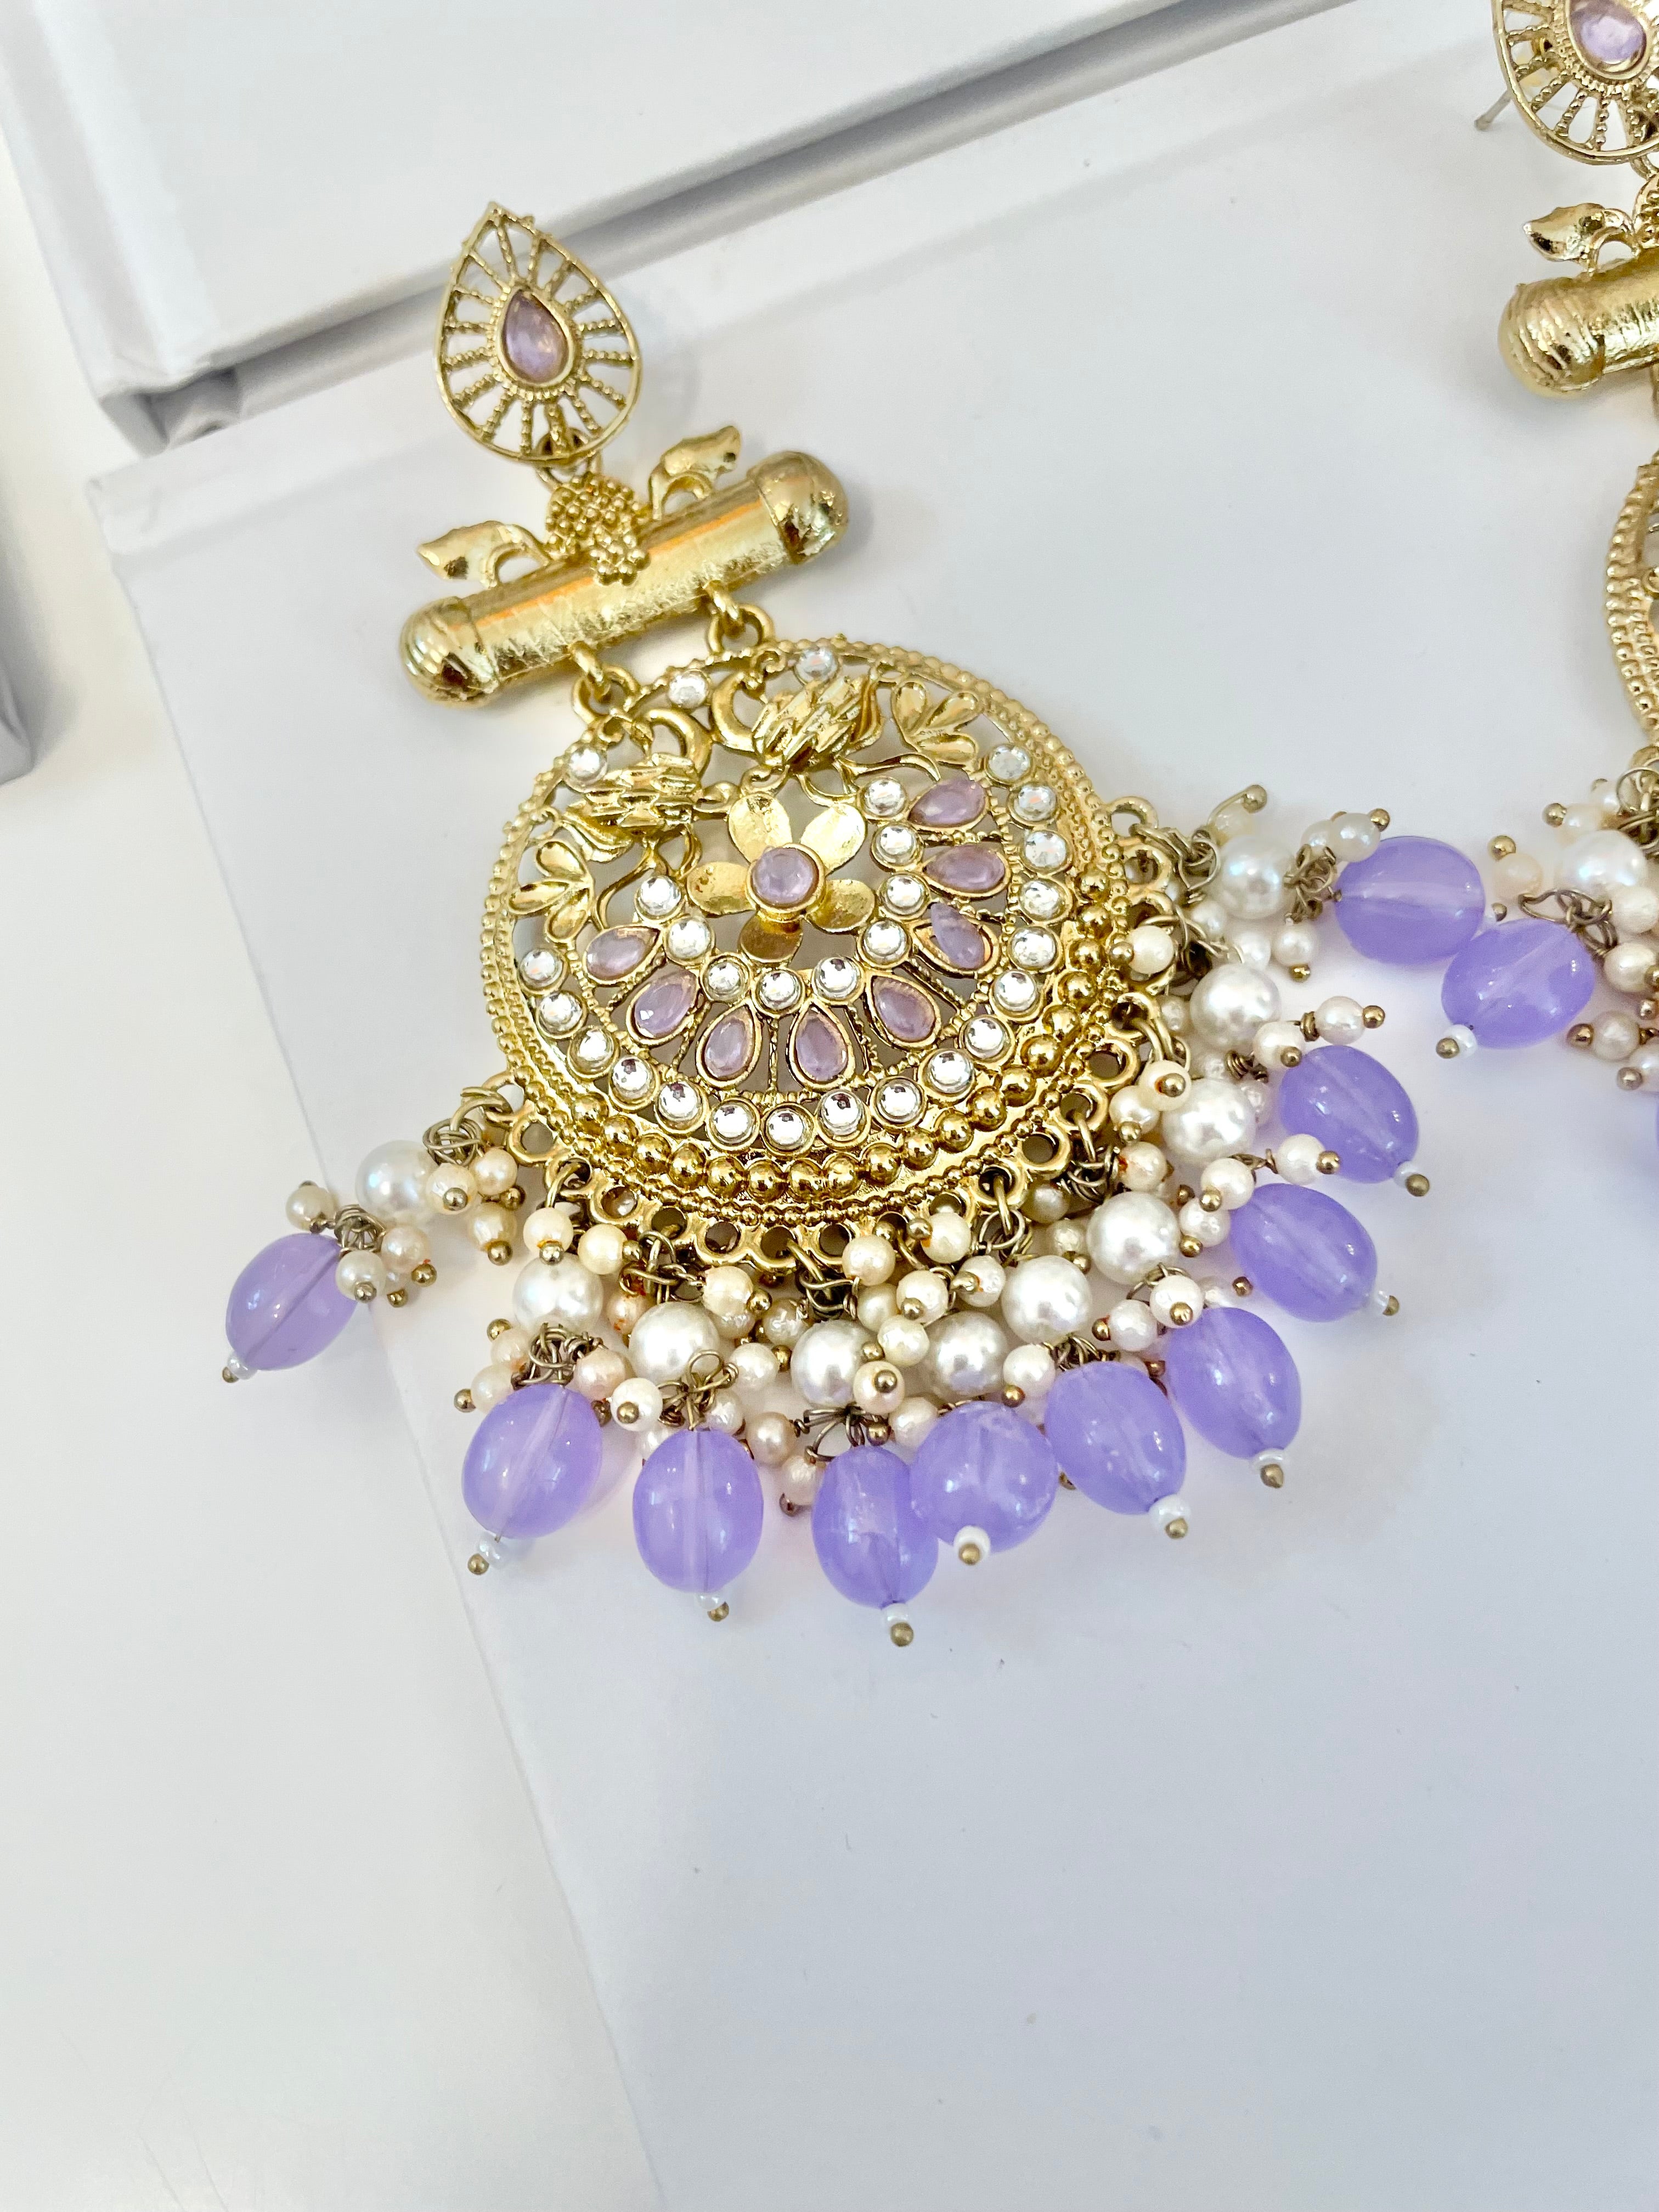 The most beautiful soft purple glass statement earrings....so feminine